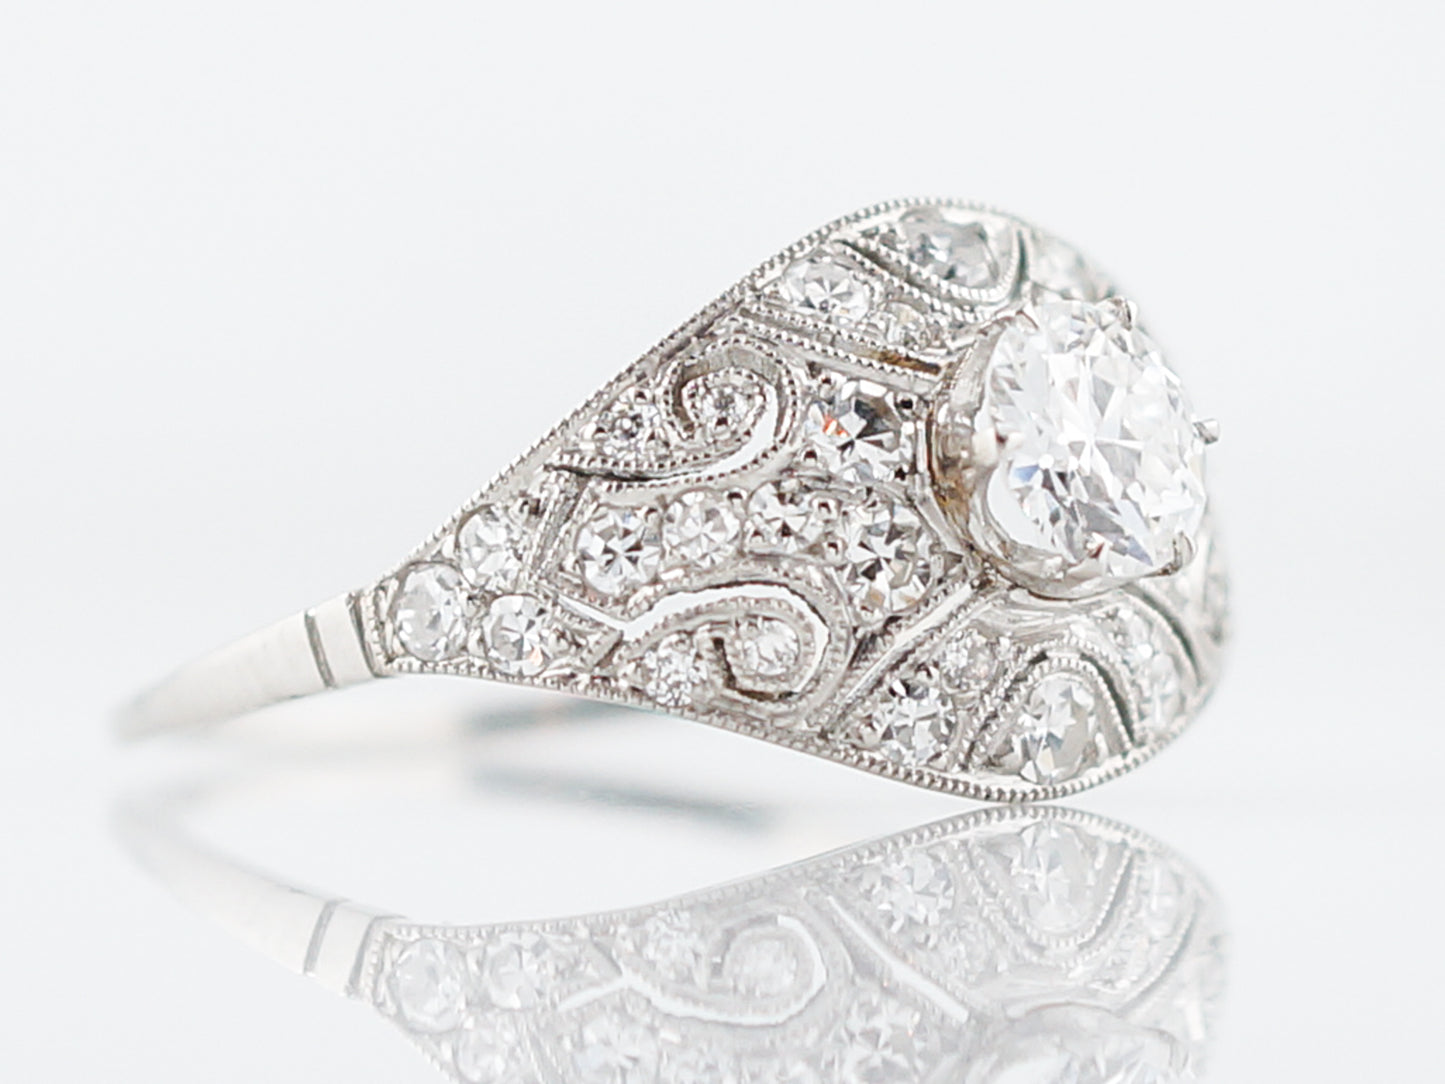 Engagement Ring Modern .38 Old European Cut Diamond in Platinum